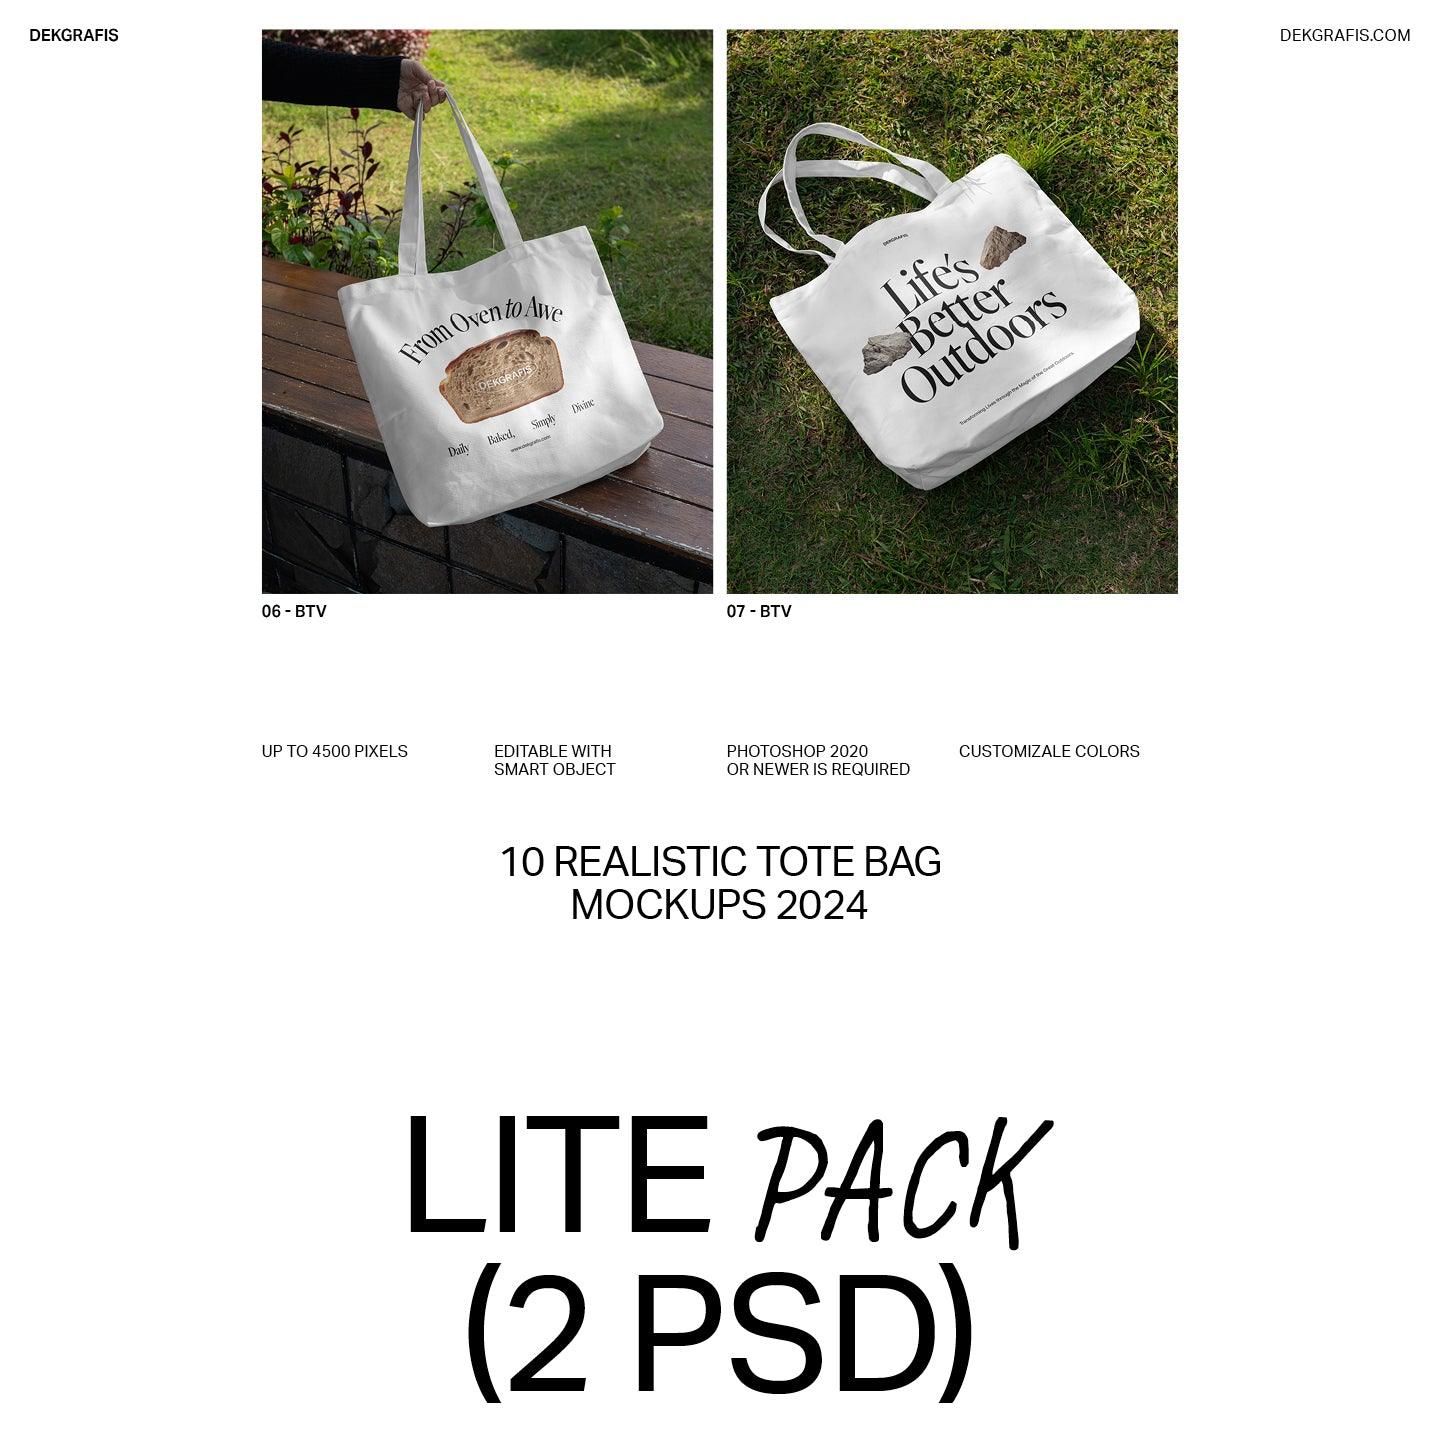 10 Realistic Tote Bag Mockups 2024